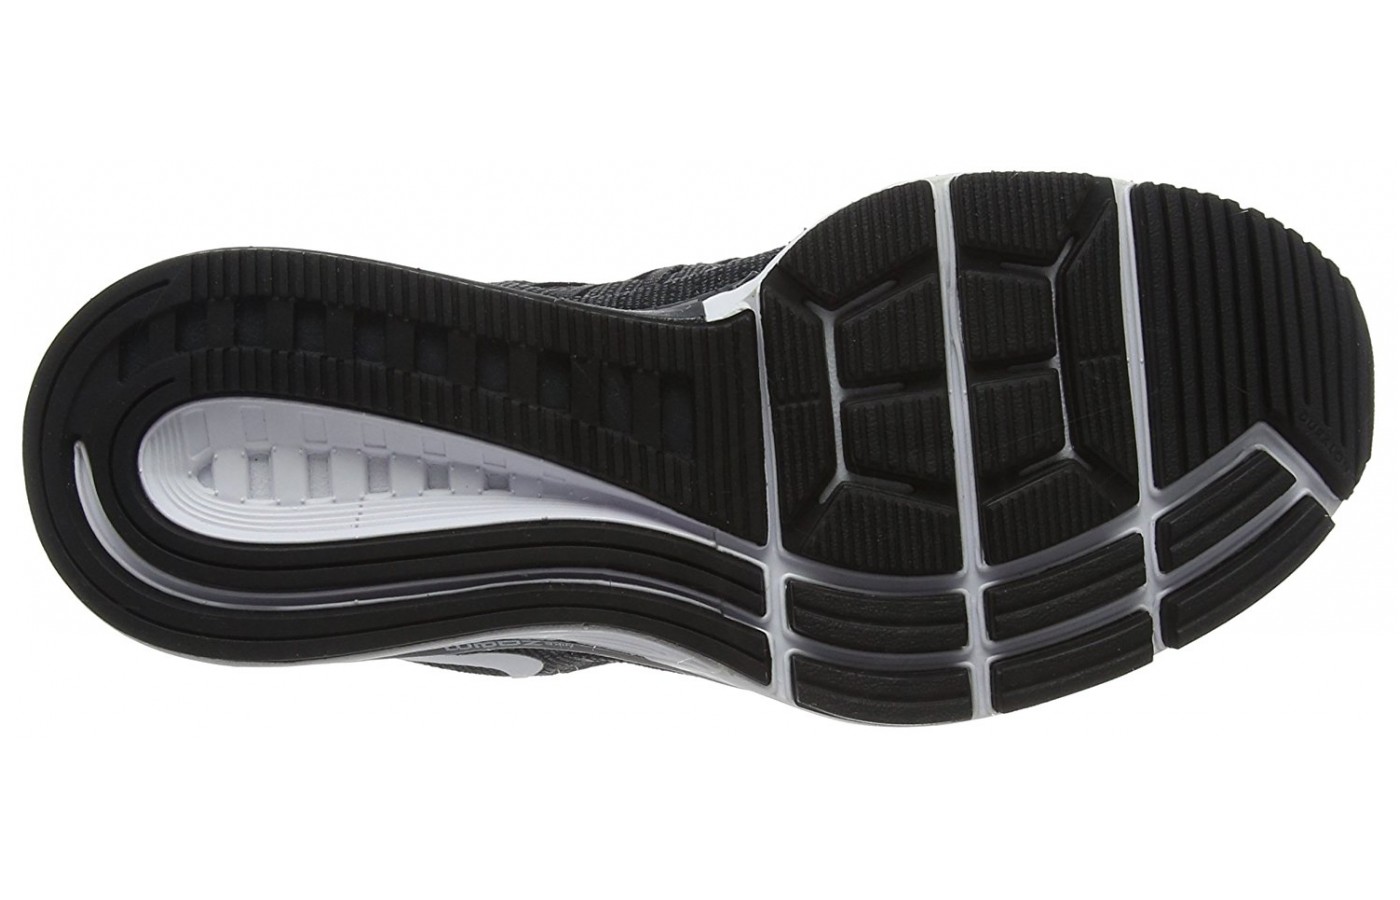 Nike Air Zoom Odyssey 2 sole